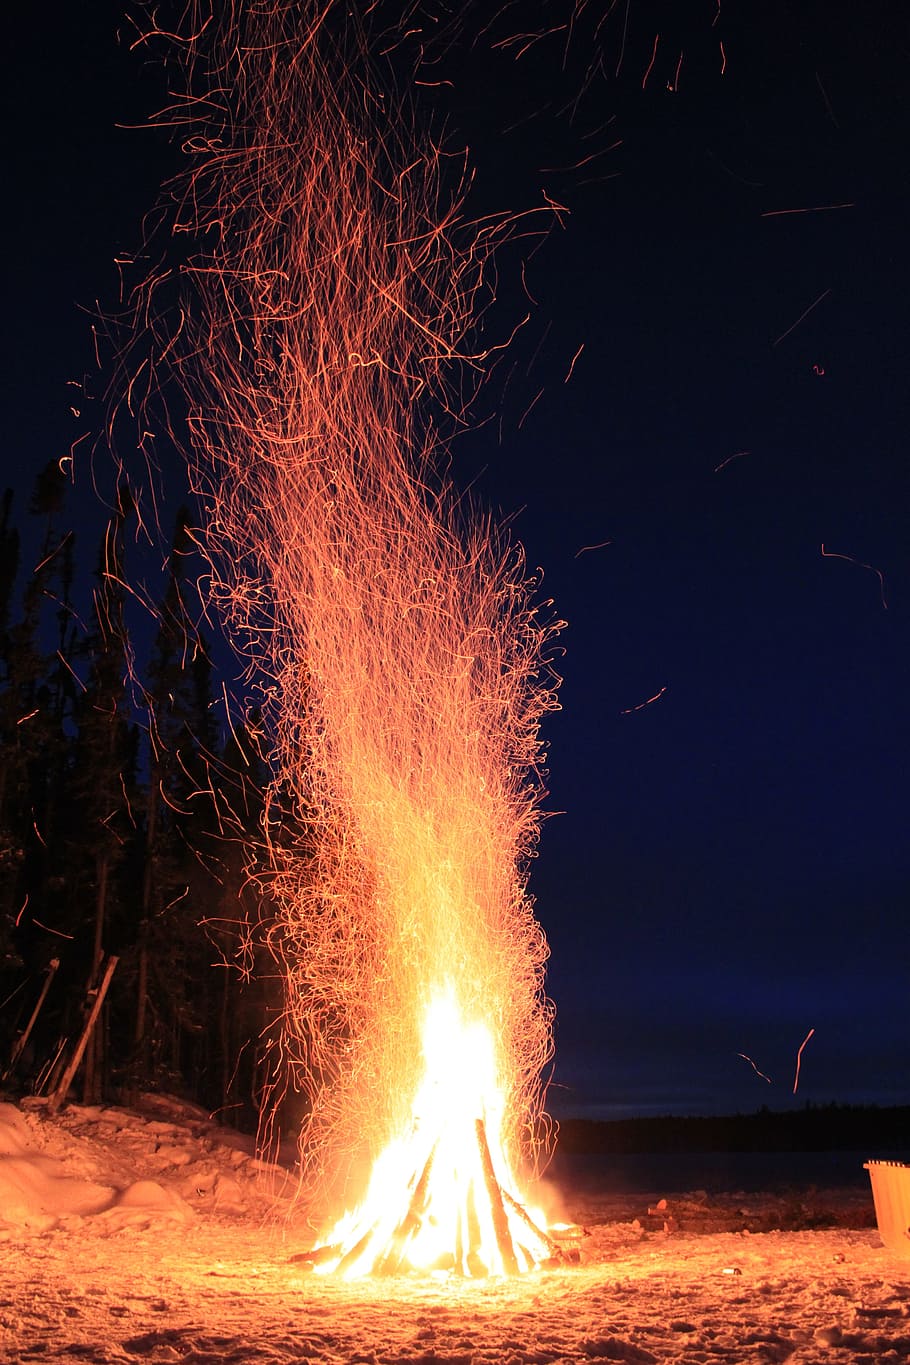 Fire, Winter, Warmth, Hot, flame, burning, night, heat - temperature, campfire, fire - natural phenomenon